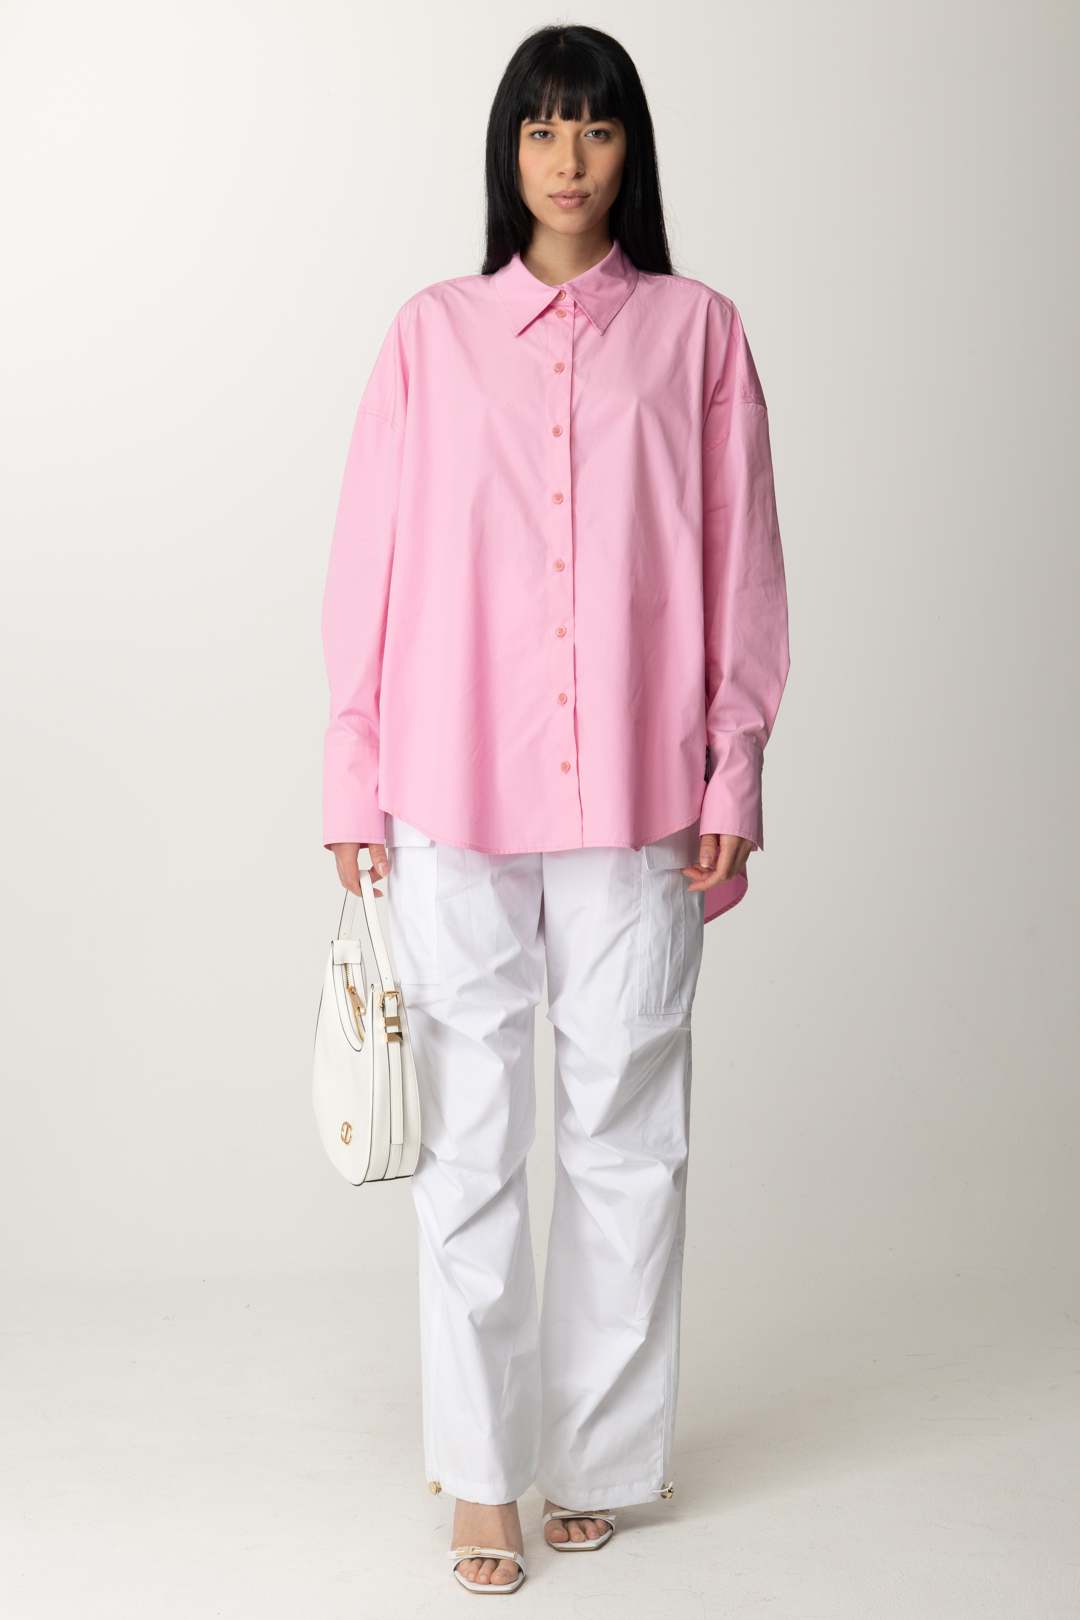 Vorschau: Patrizia Pepe Baumwoll-Shirt Fresh Pink